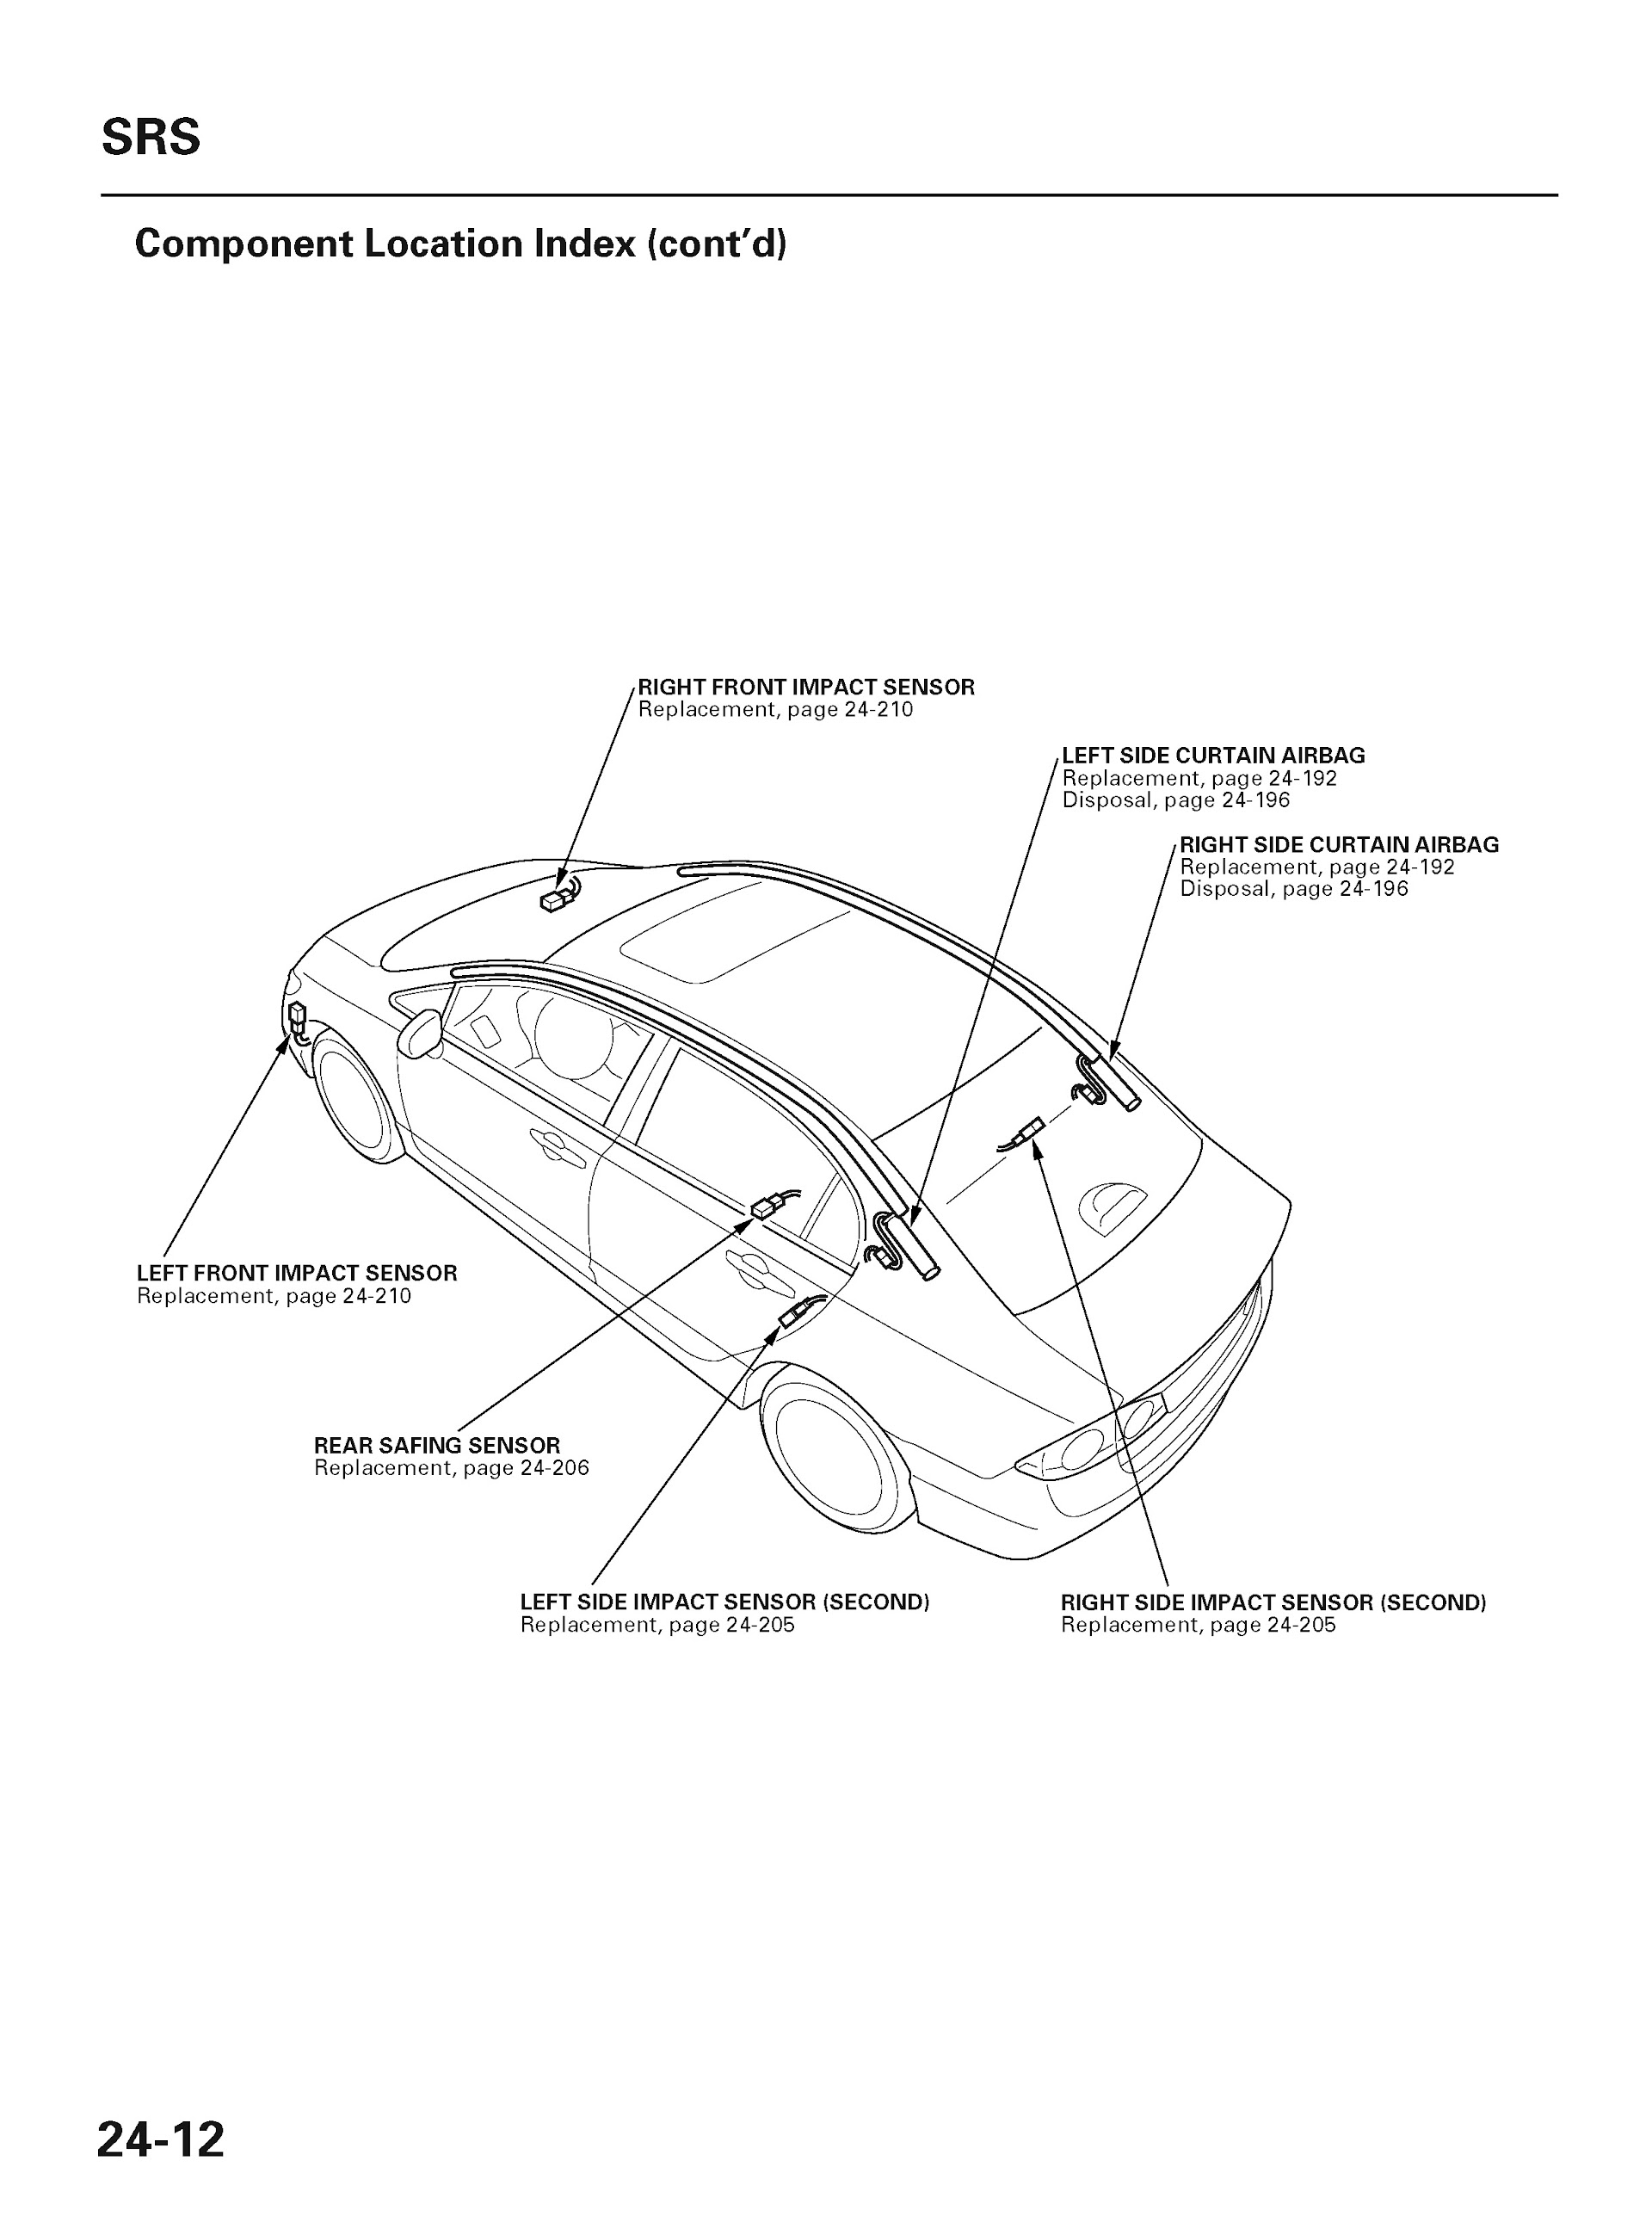 2009 Acura CSX Repair Manual, Components Location